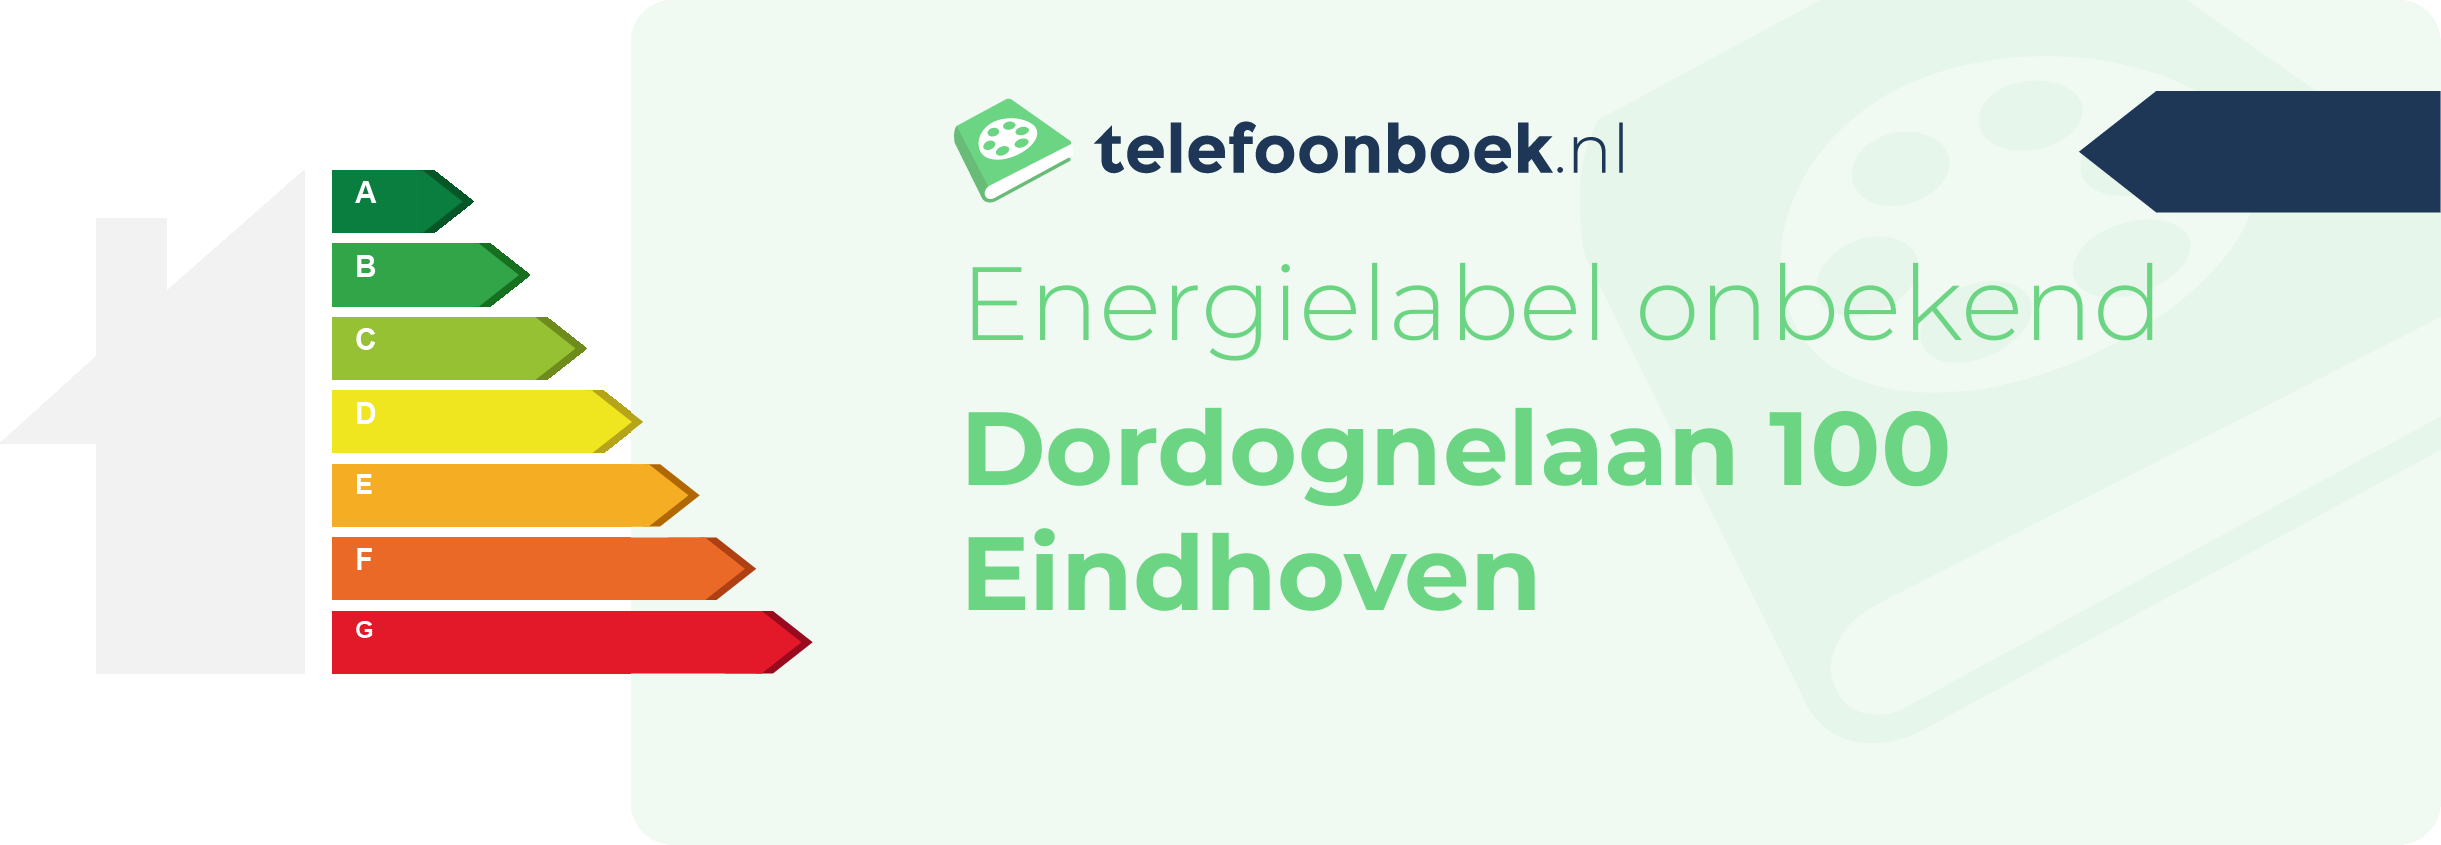 Energielabel Dordognelaan 100 Eindhoven